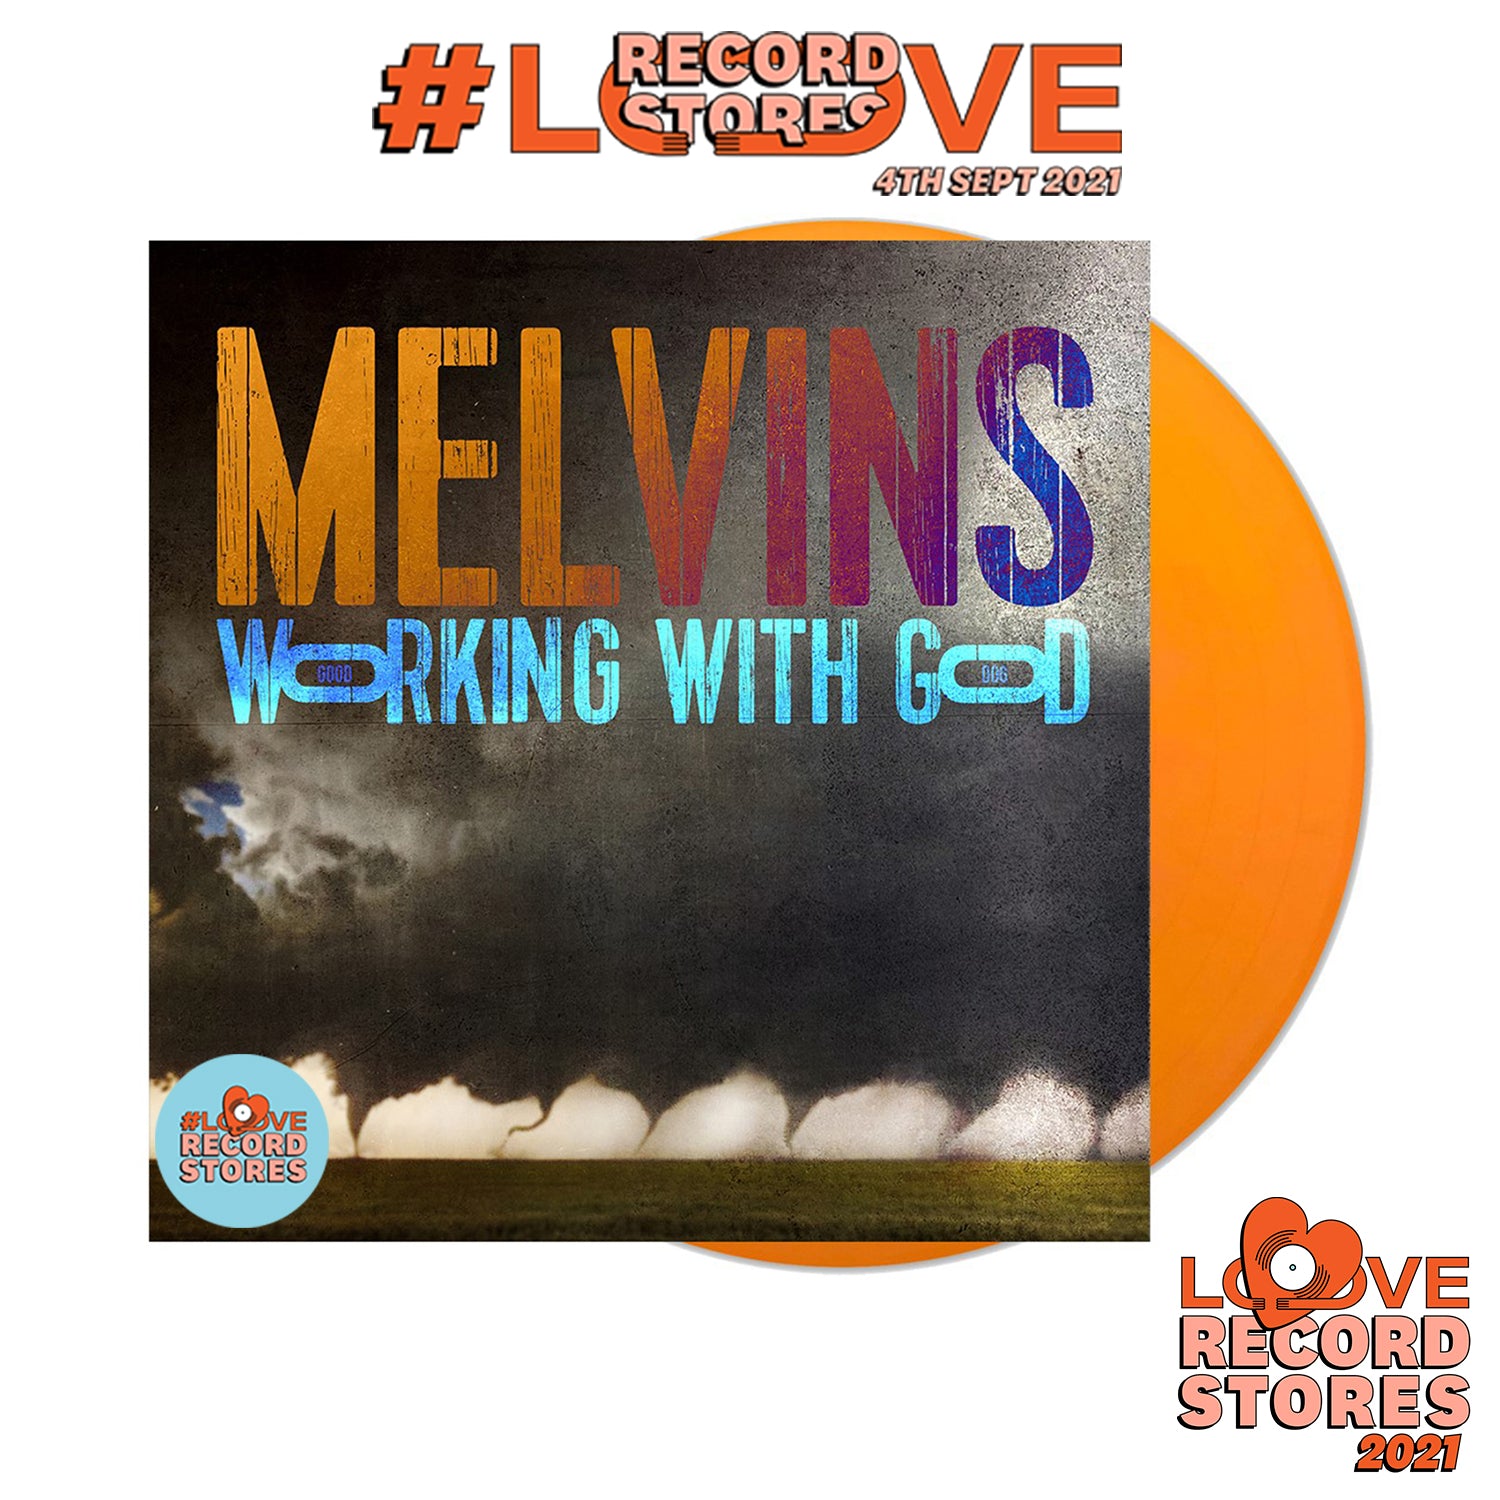 MELVINS - Working With God (LRS 2021) - LP - Orange Vinyl